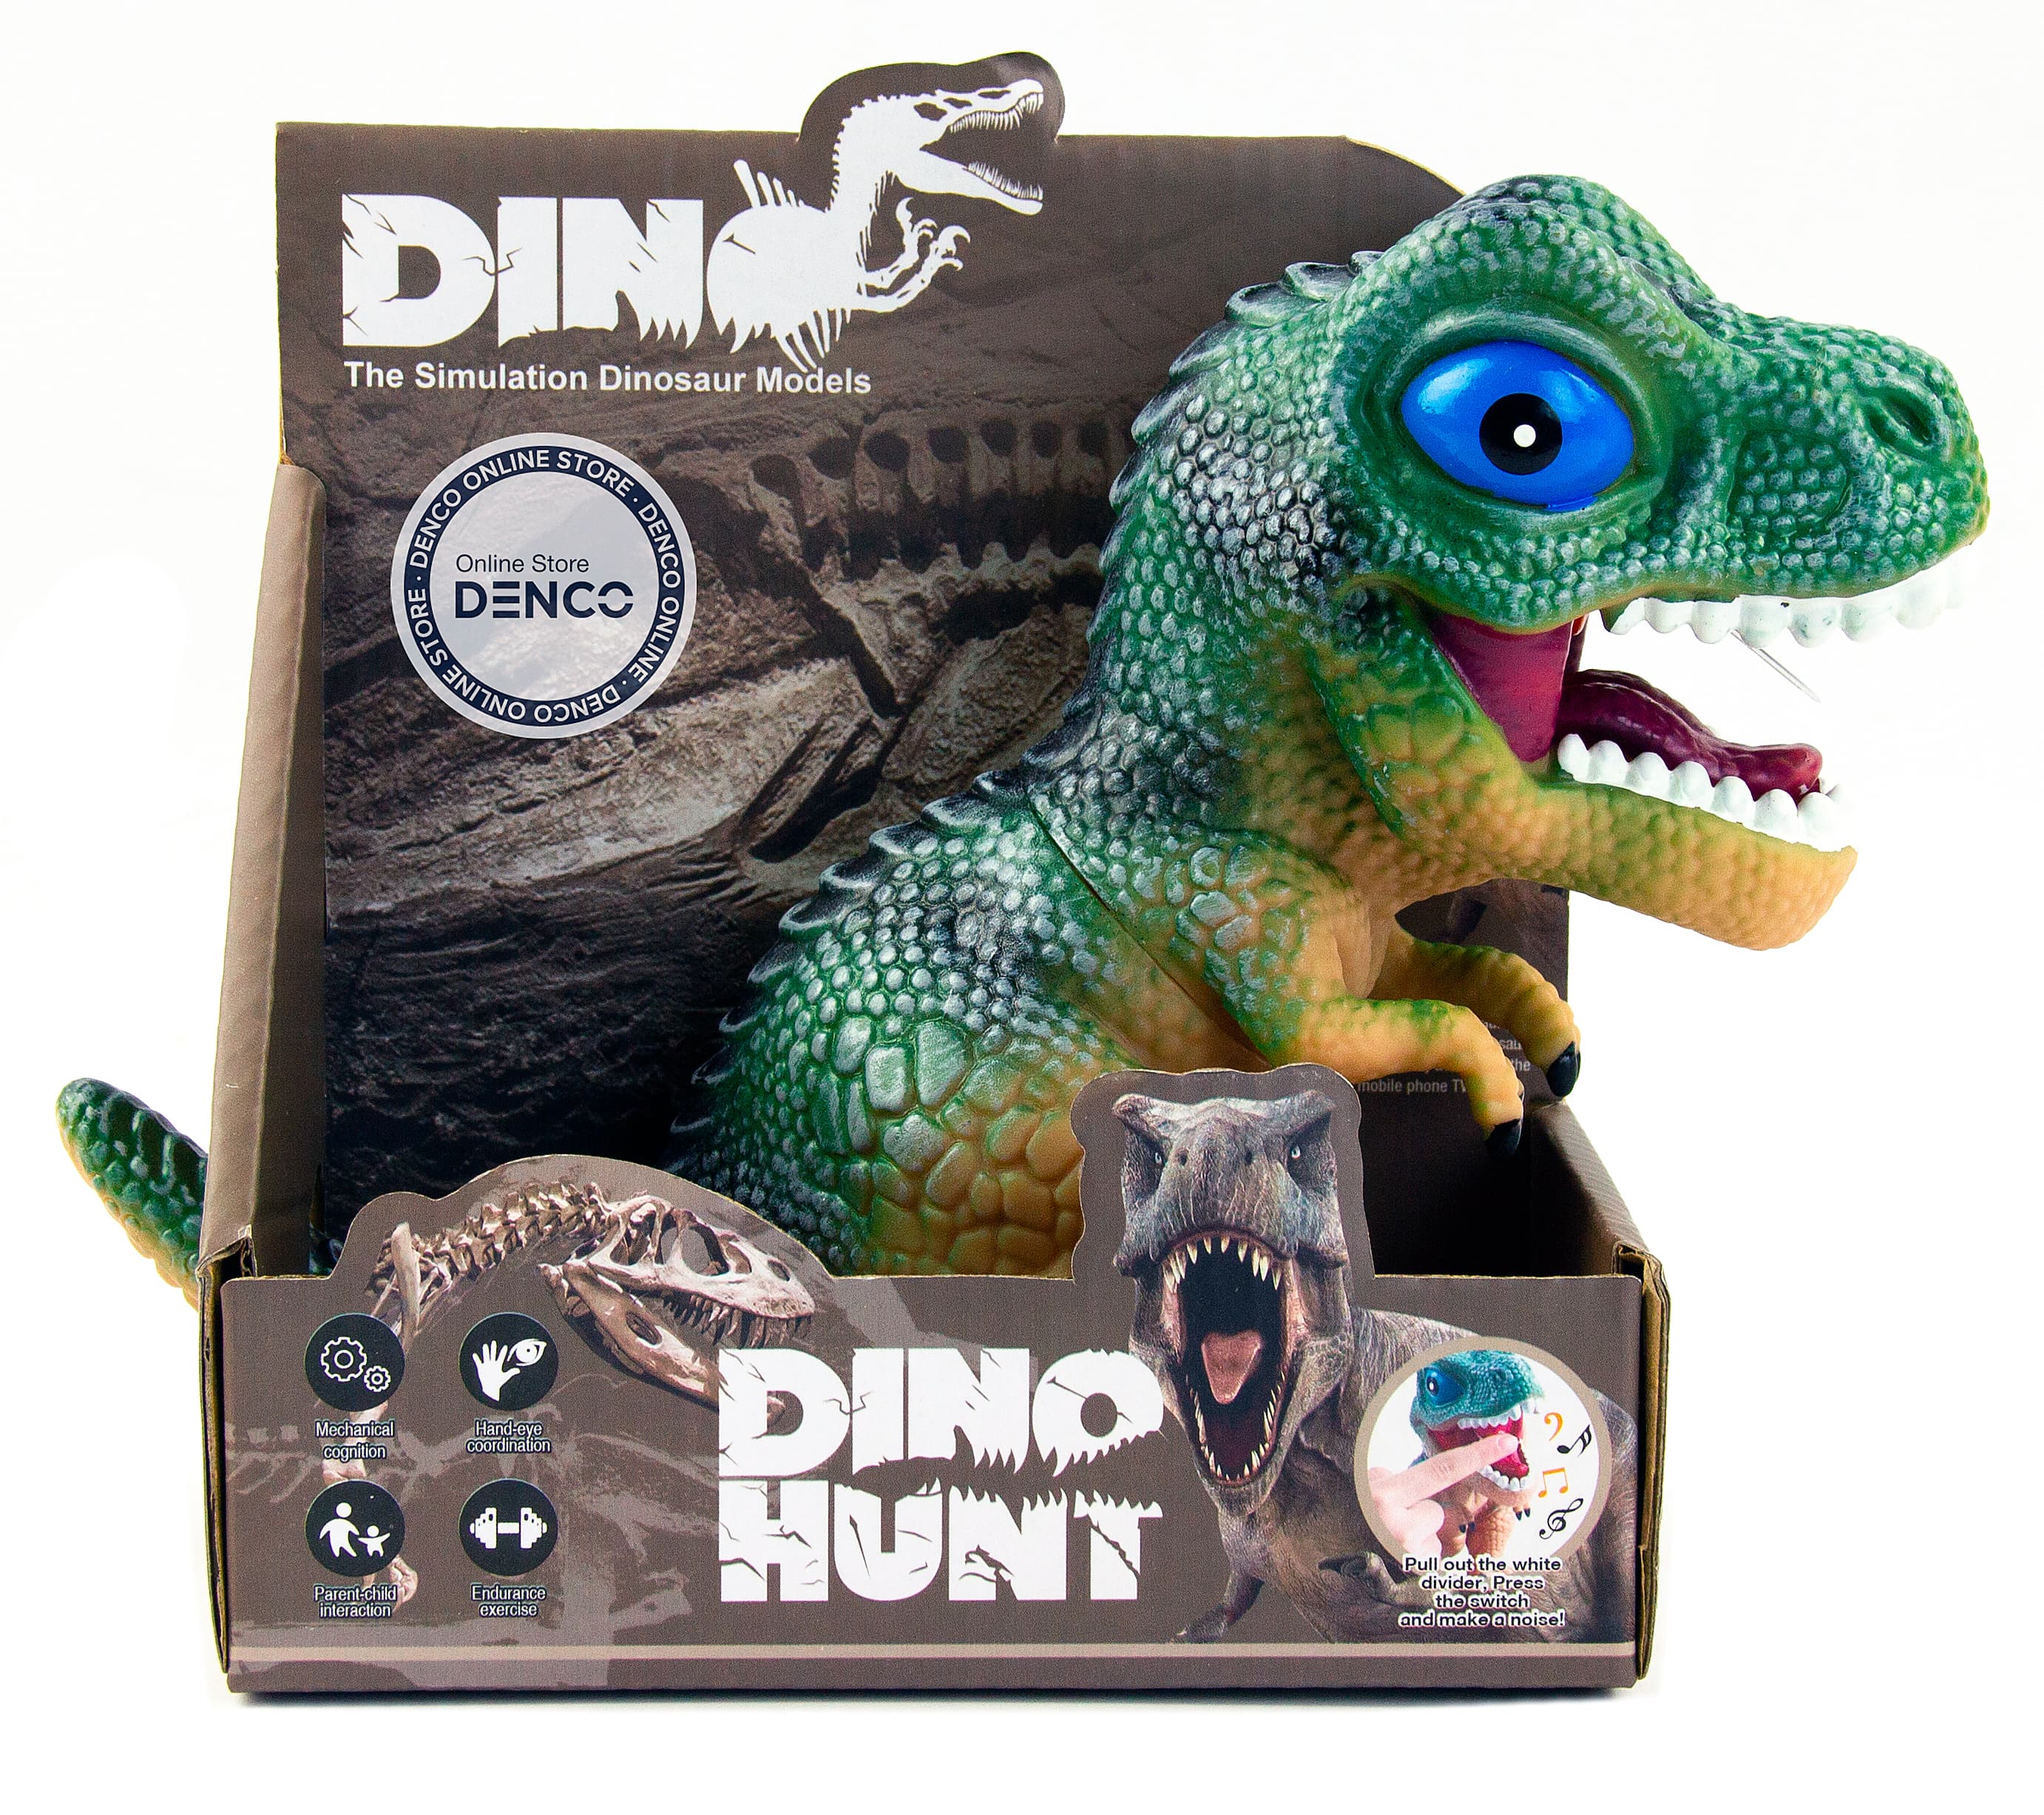 Фигурка резинового динозавра «Dino Hunt» 1888 со звуком 1 шт. / Микс